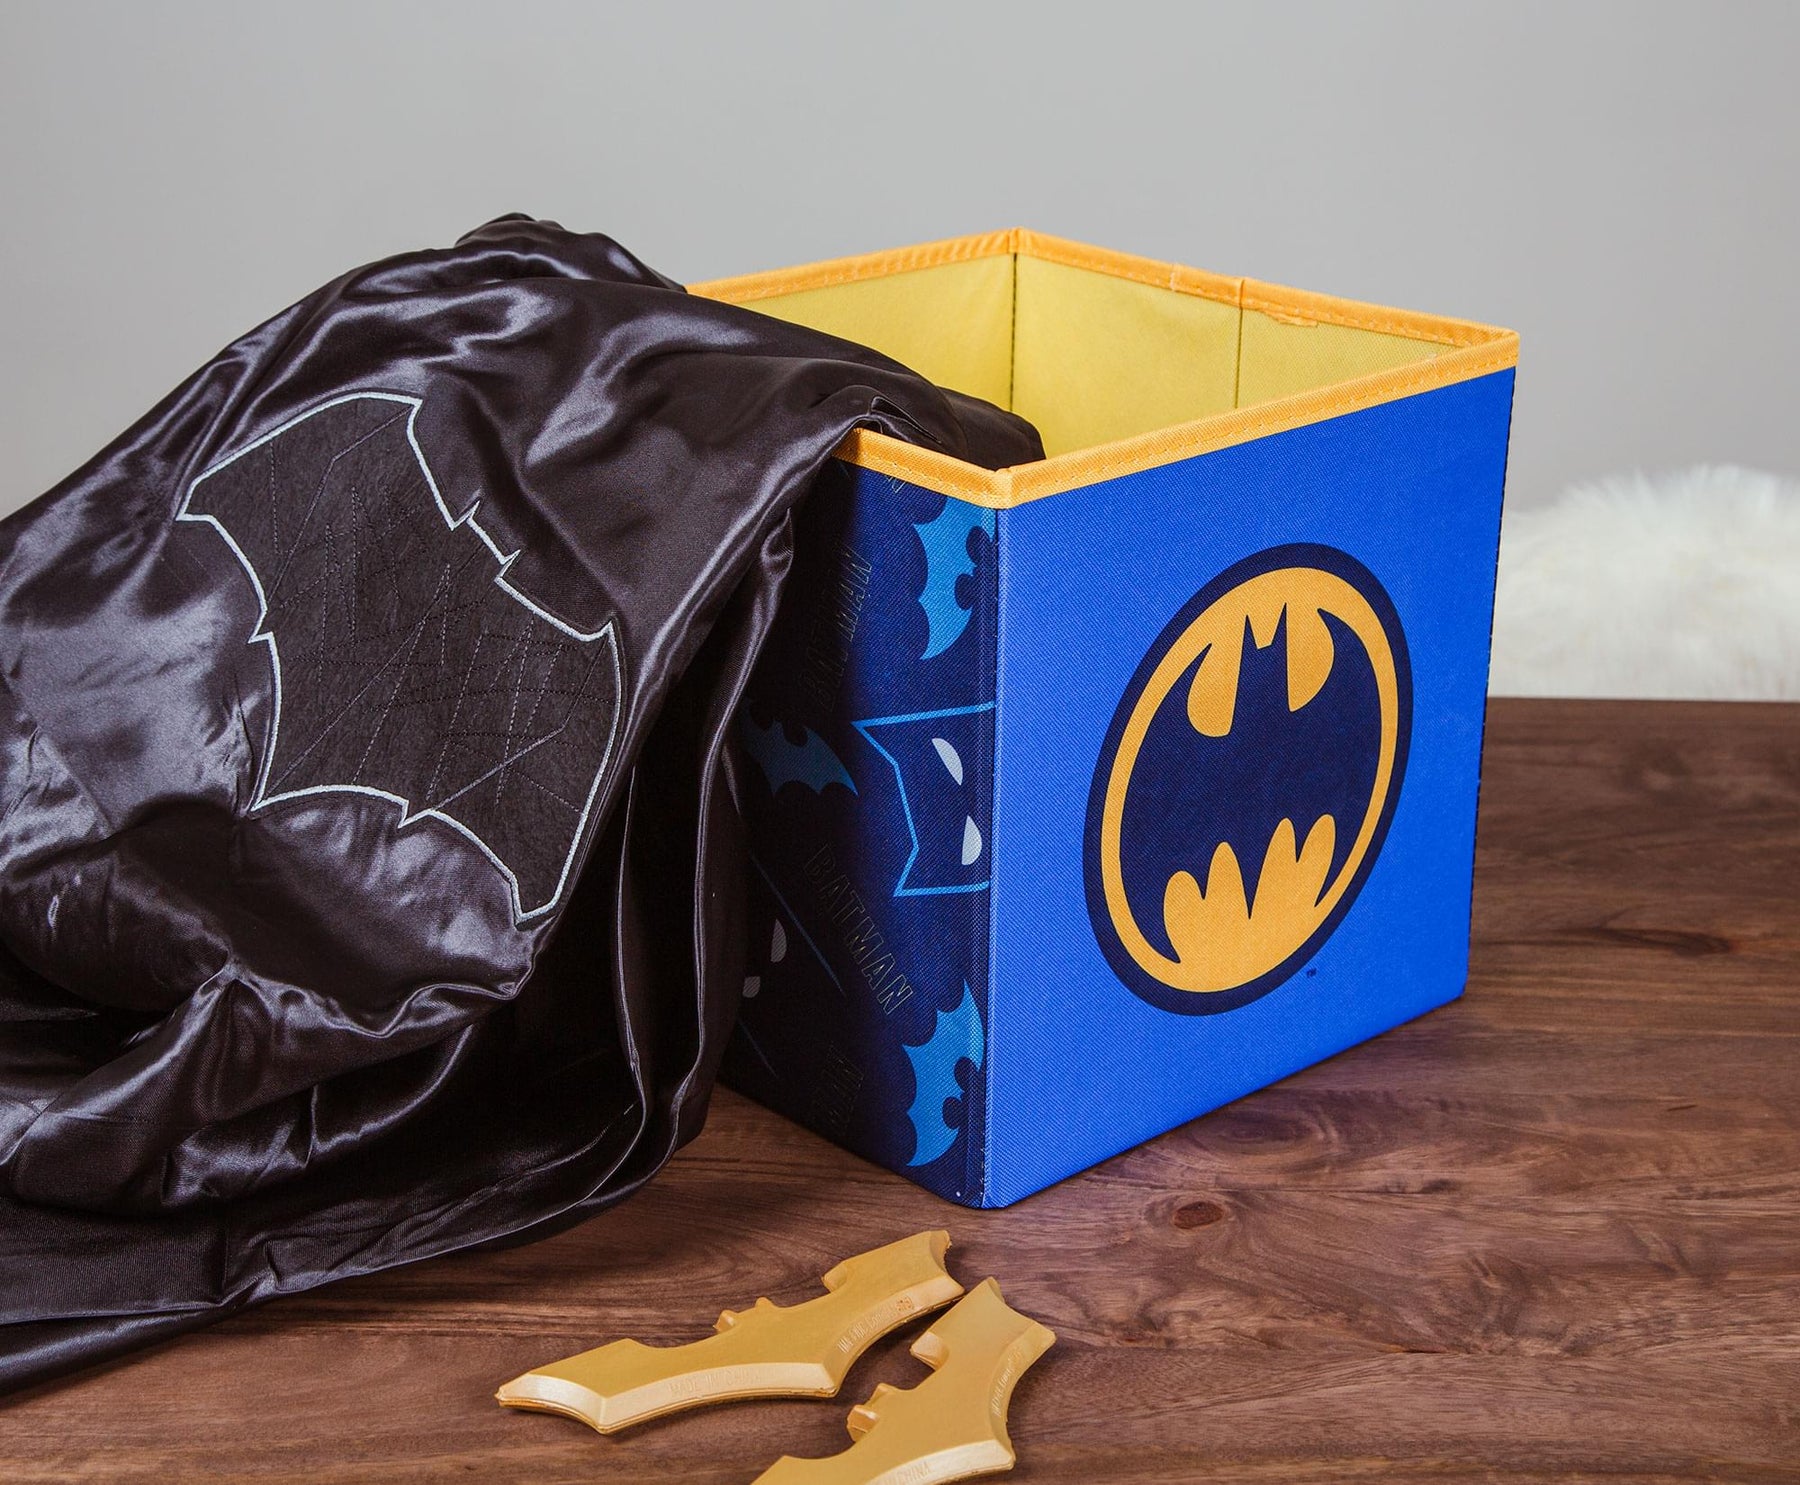 DC Comics Batman Logo Storage Bin Cube Organizer | 11 Inches